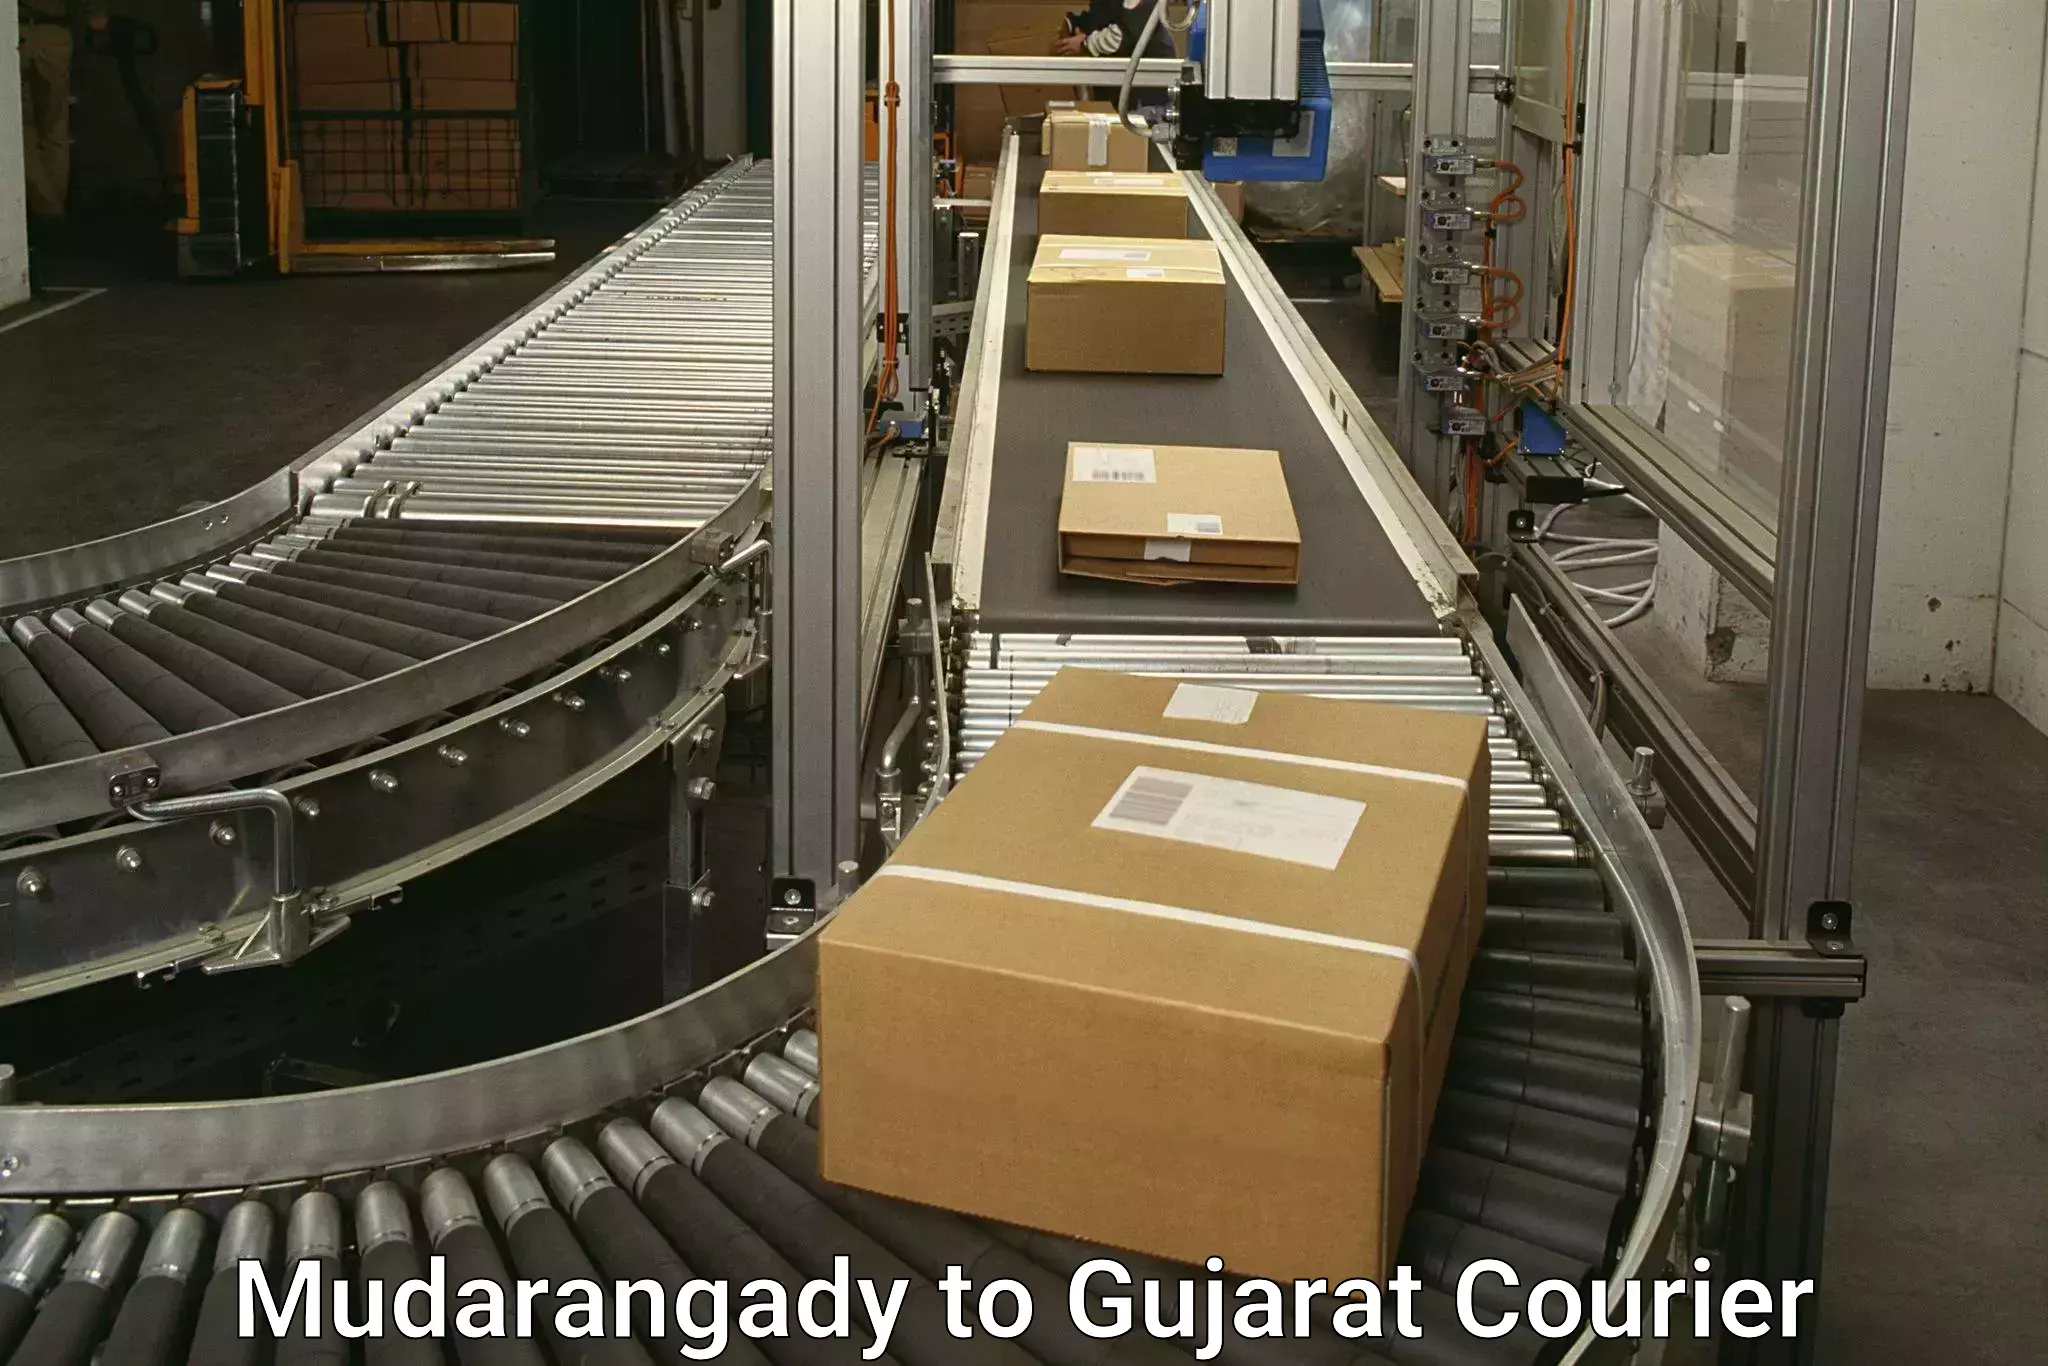 Courier service efficiency Mudarangady to Vatadara